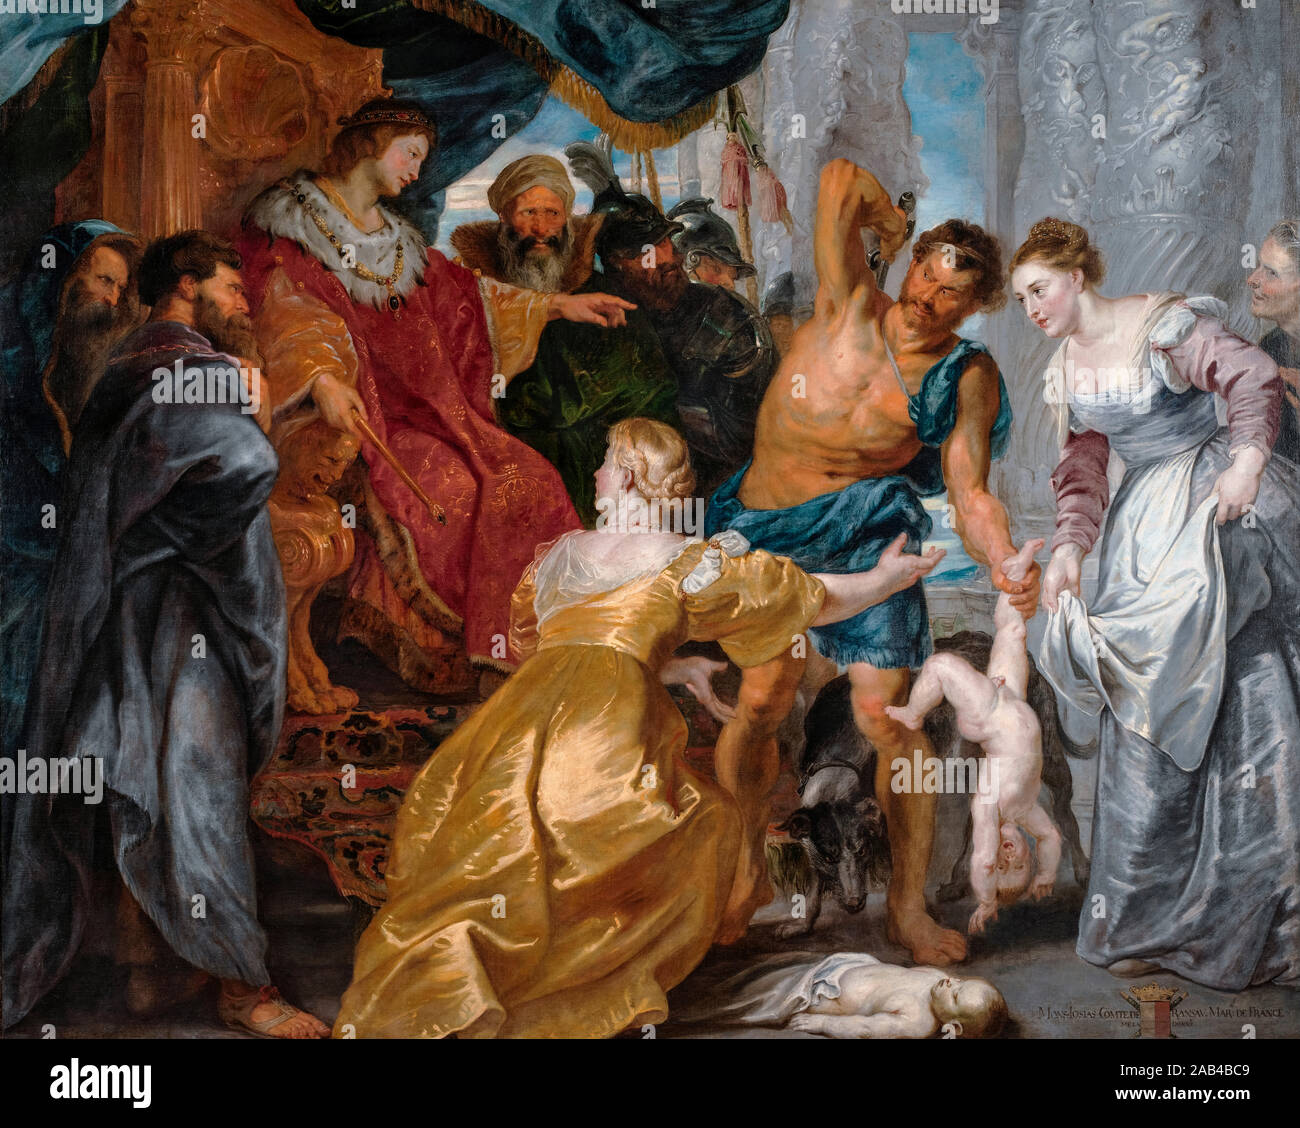 Peter Paul Rubens, The Judgement of Solomon, painting, 1617 Stock Photo